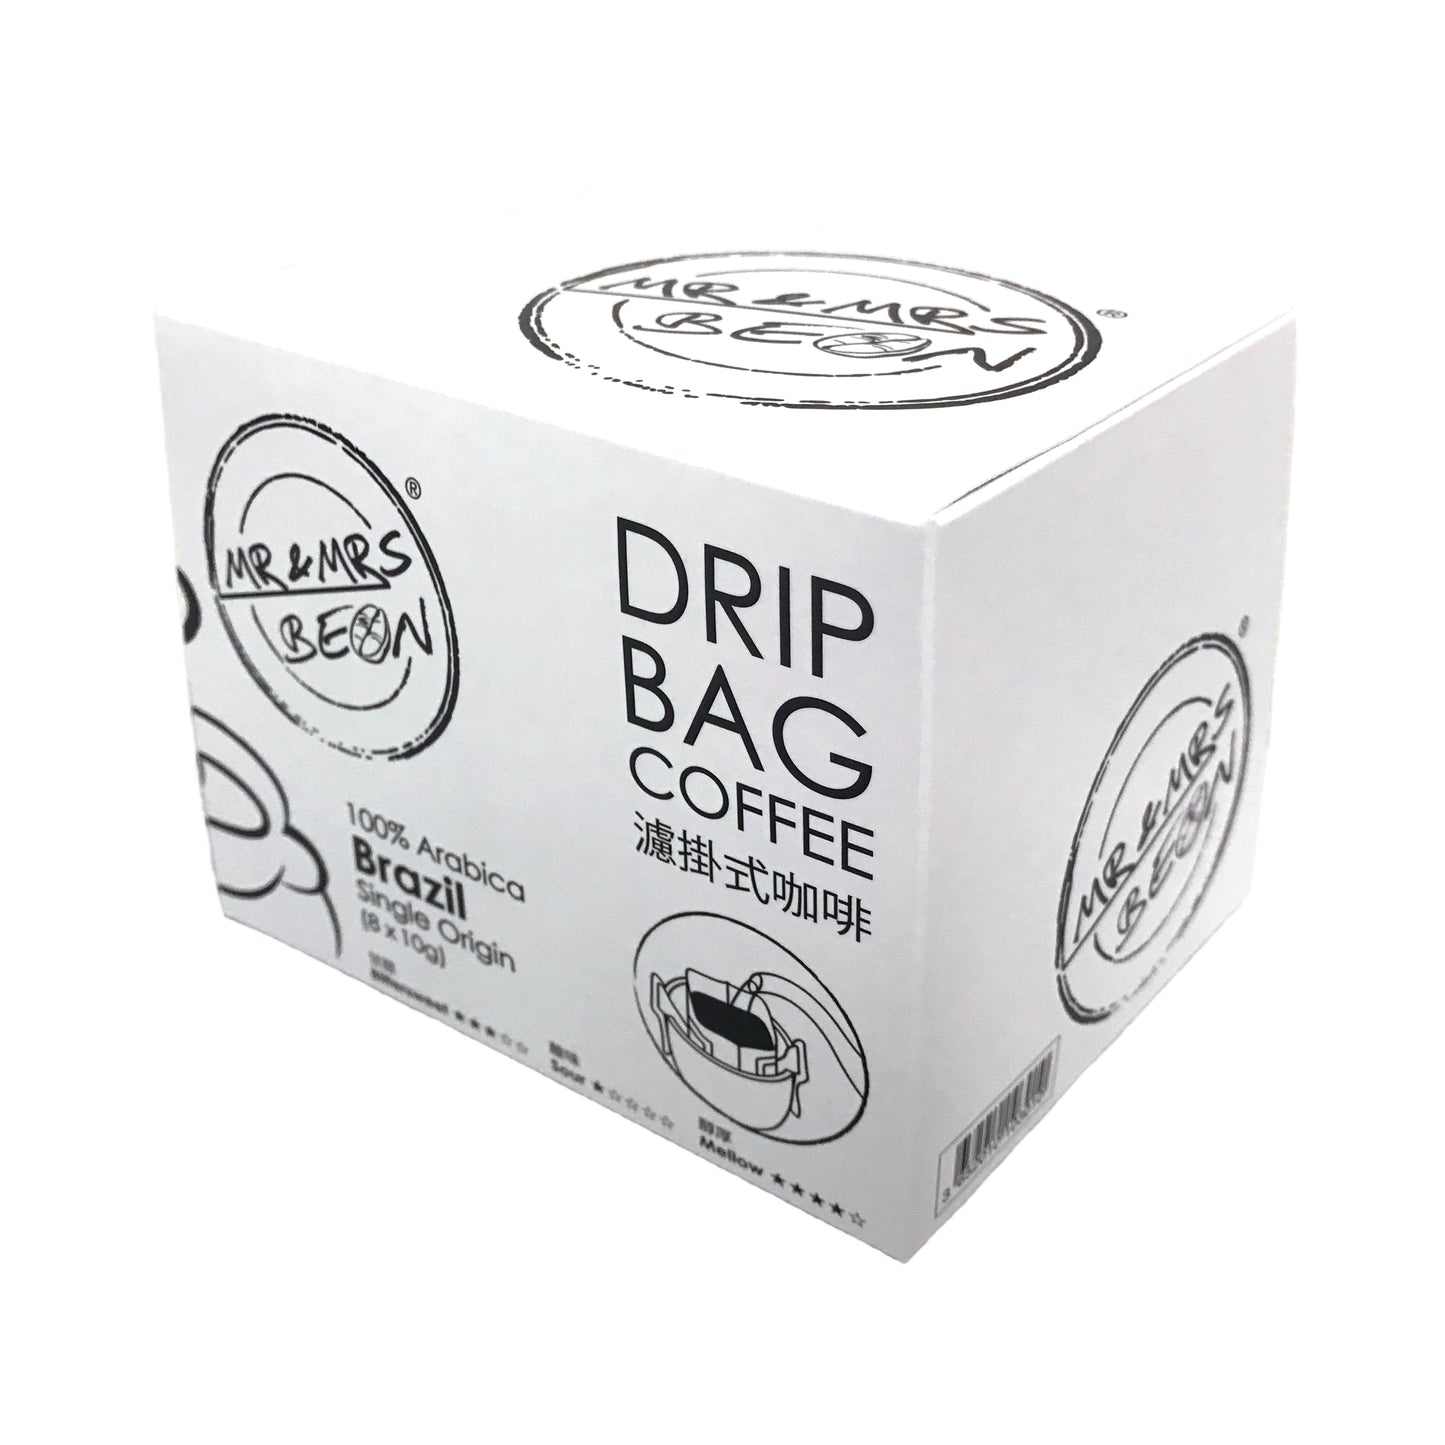 MR & MRS BEAN Brazil Single Origin Drip Bag Coffee bundle 4 boxes - starcopia design store